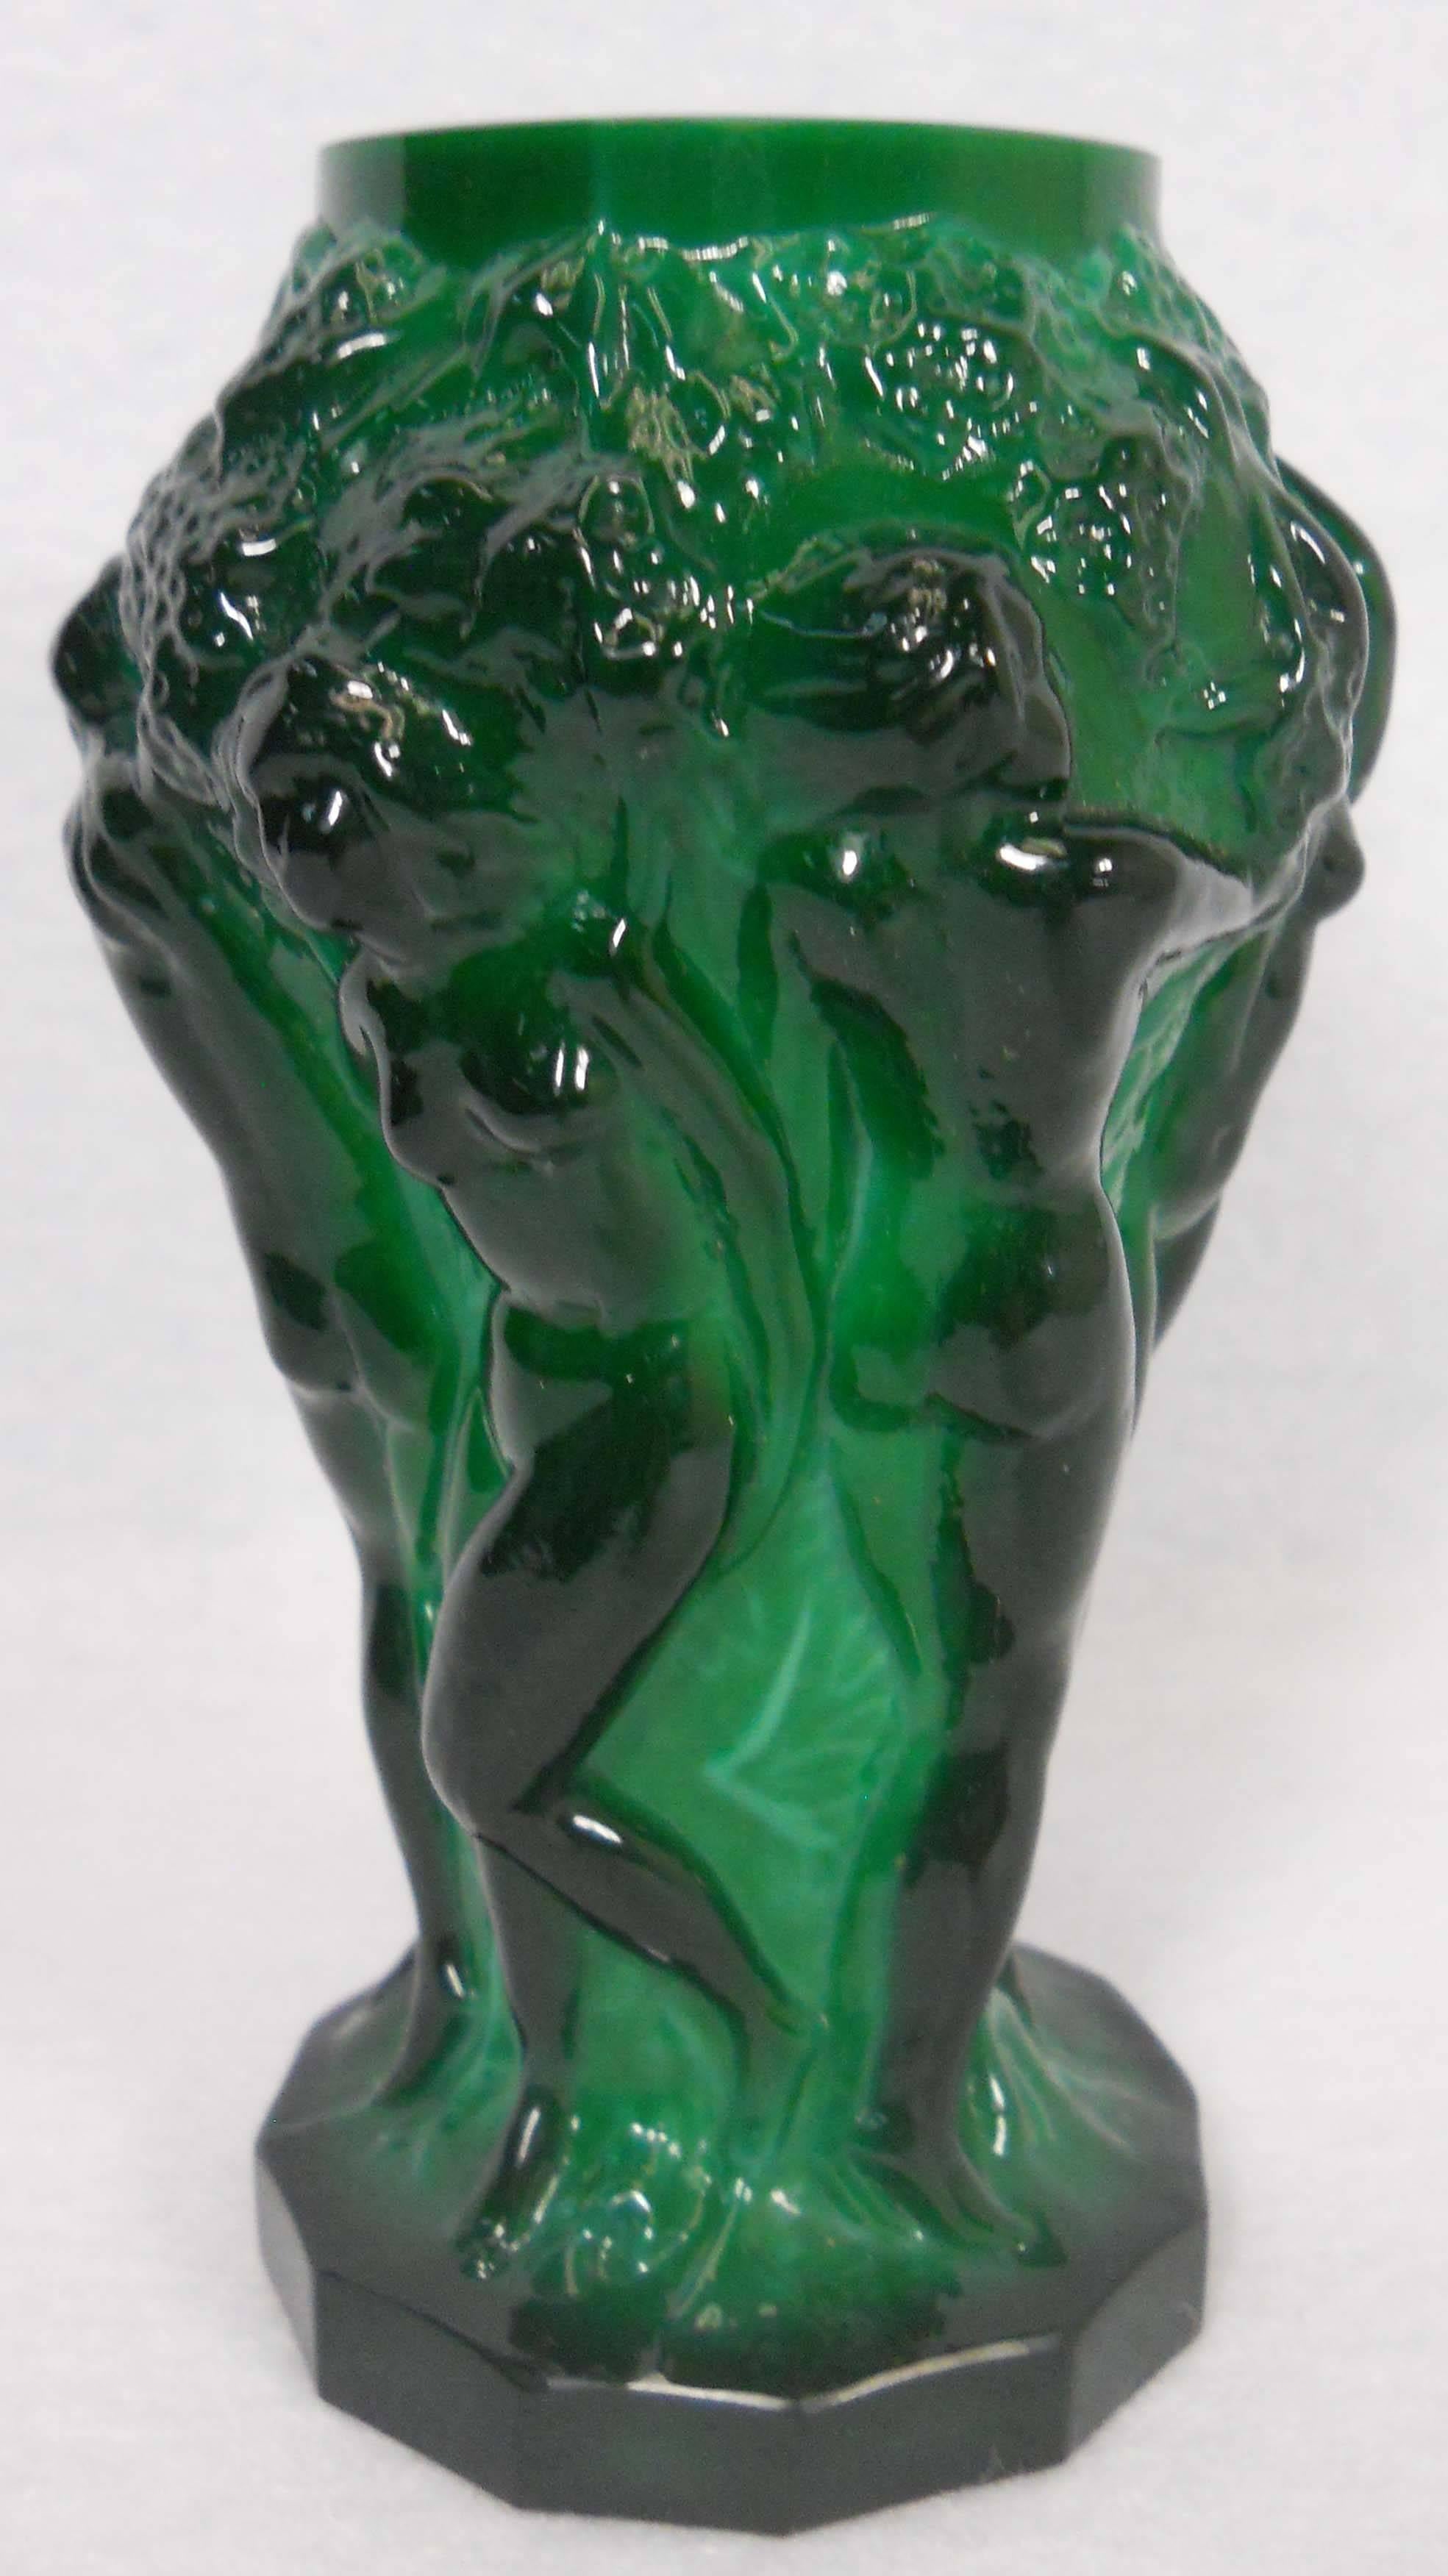 Molded Art Deco Malachite Glass Vase by Riedel Glass for Schlevogt's 1930s Ingrid Line